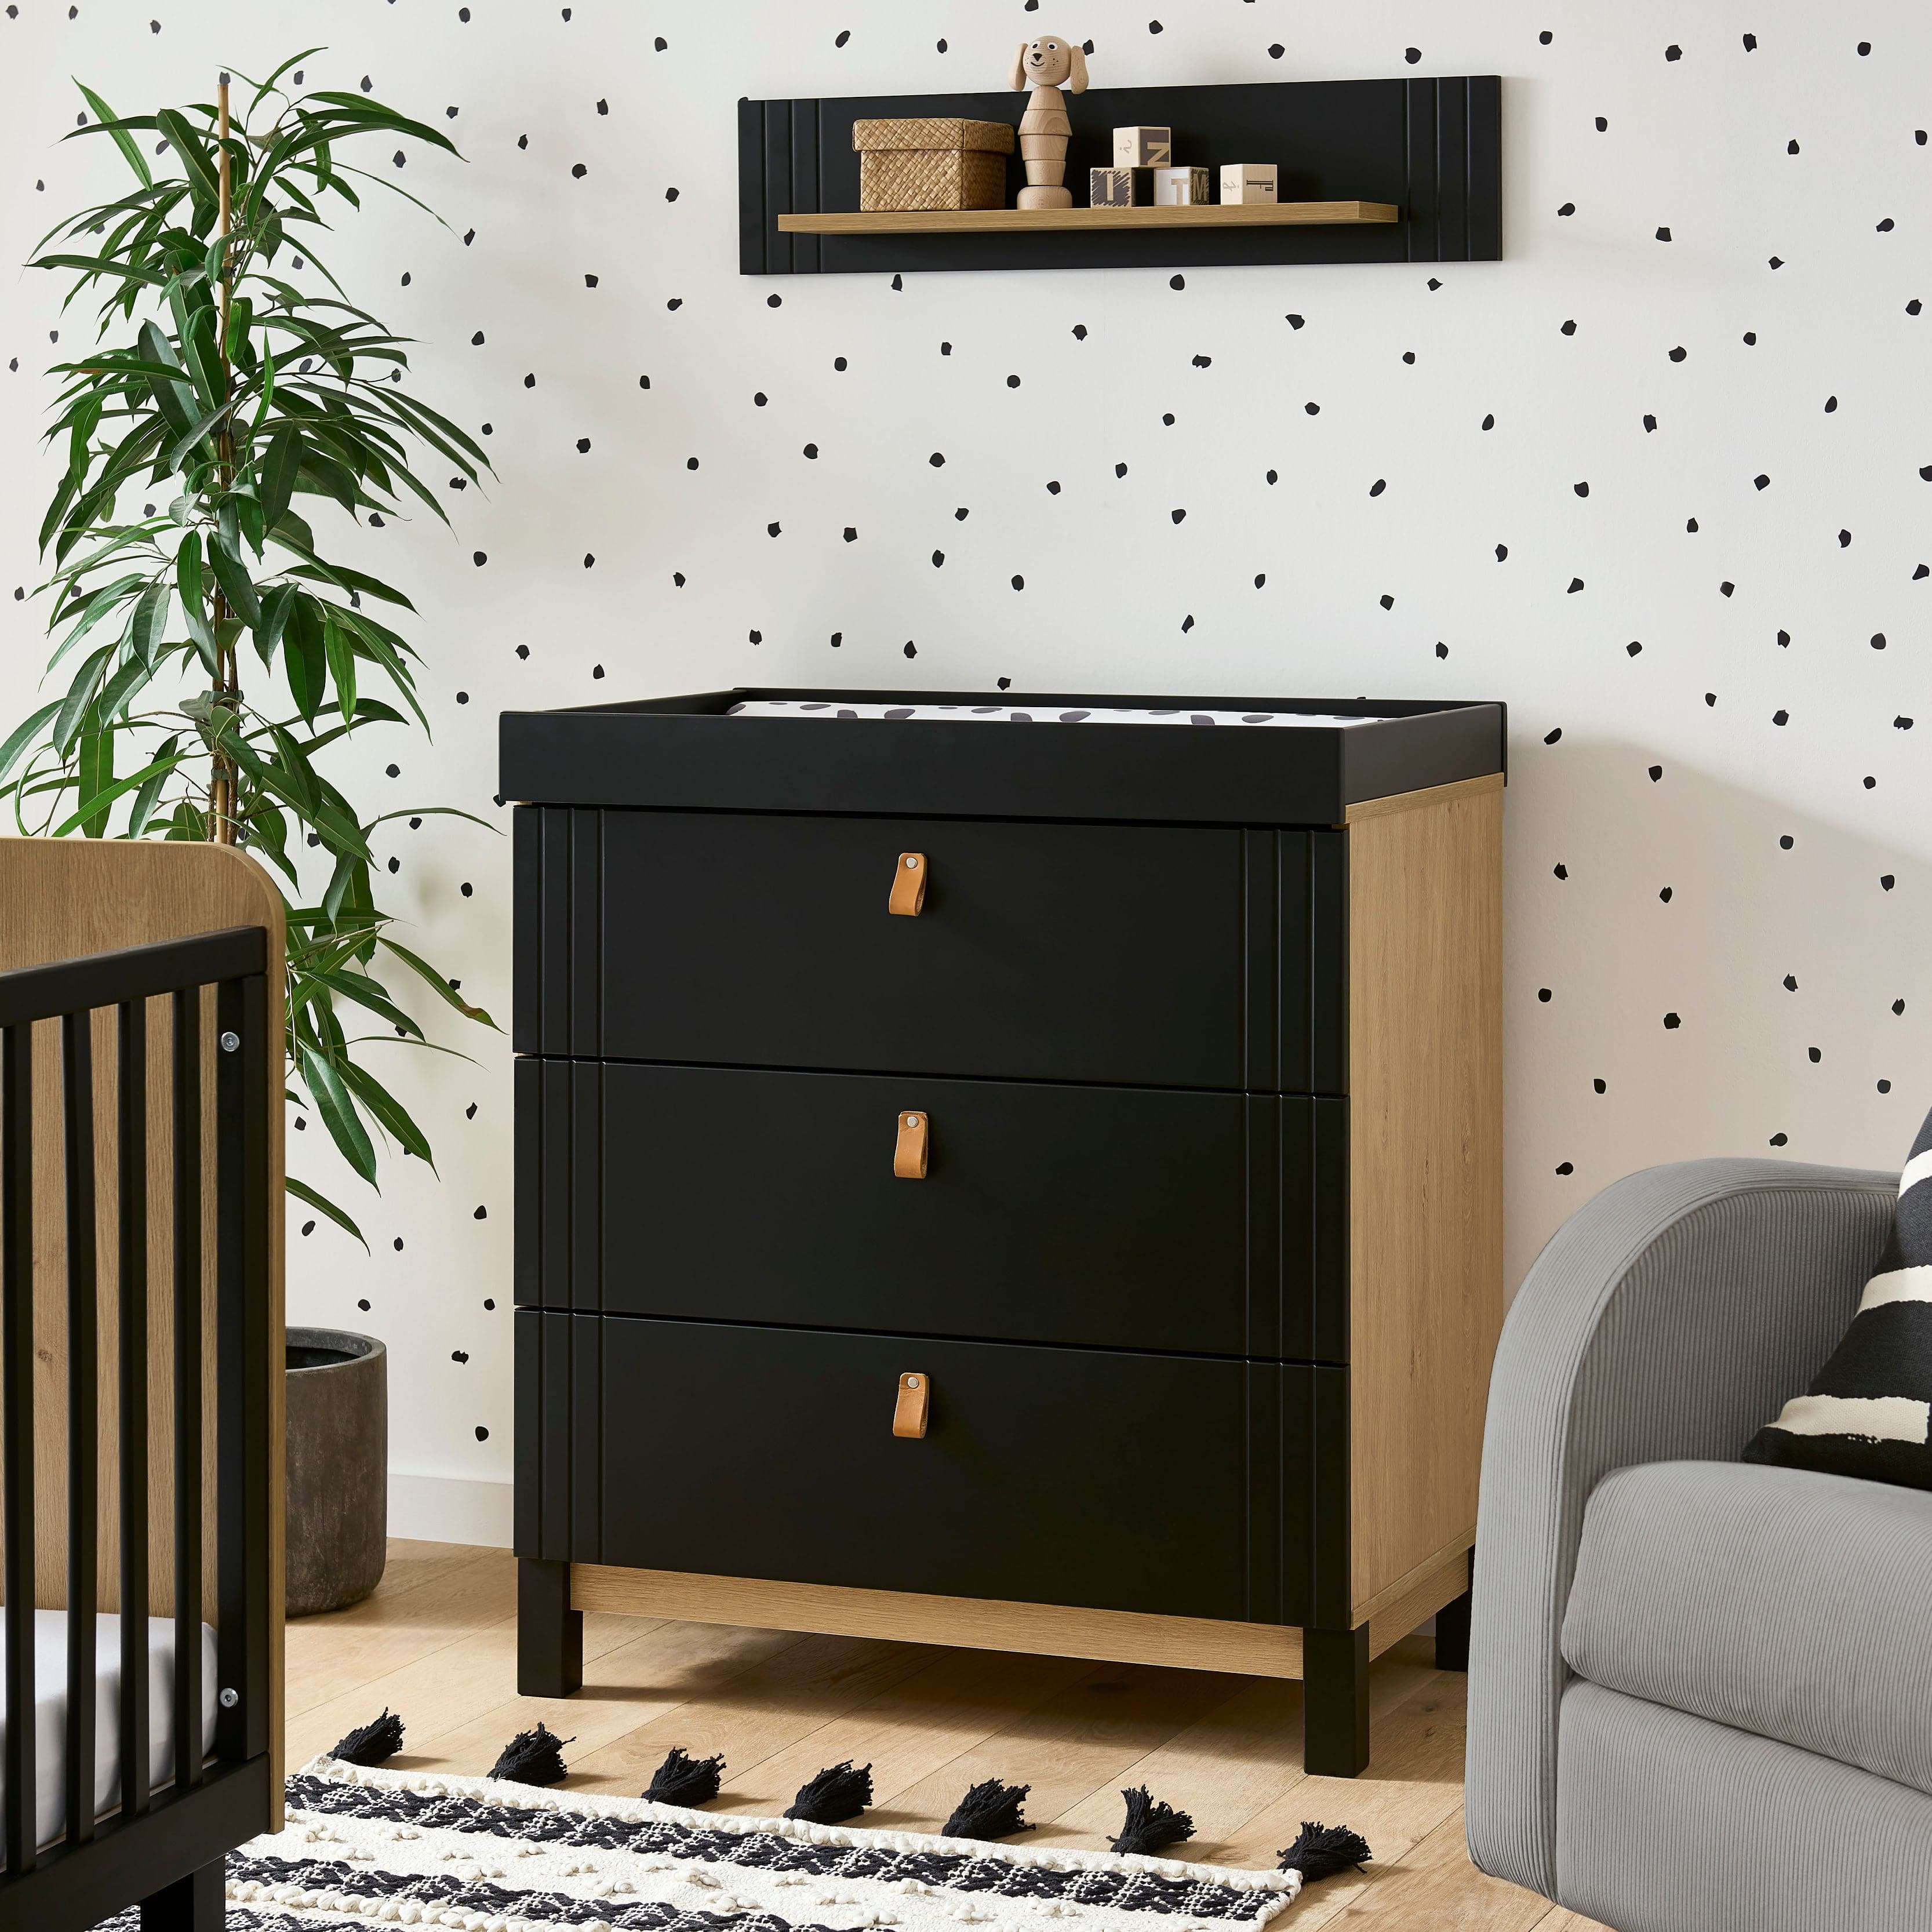 Cuddleco Rafi 3 Piece Nursery Furniture Set - Oak & Black -  | For Your Little One